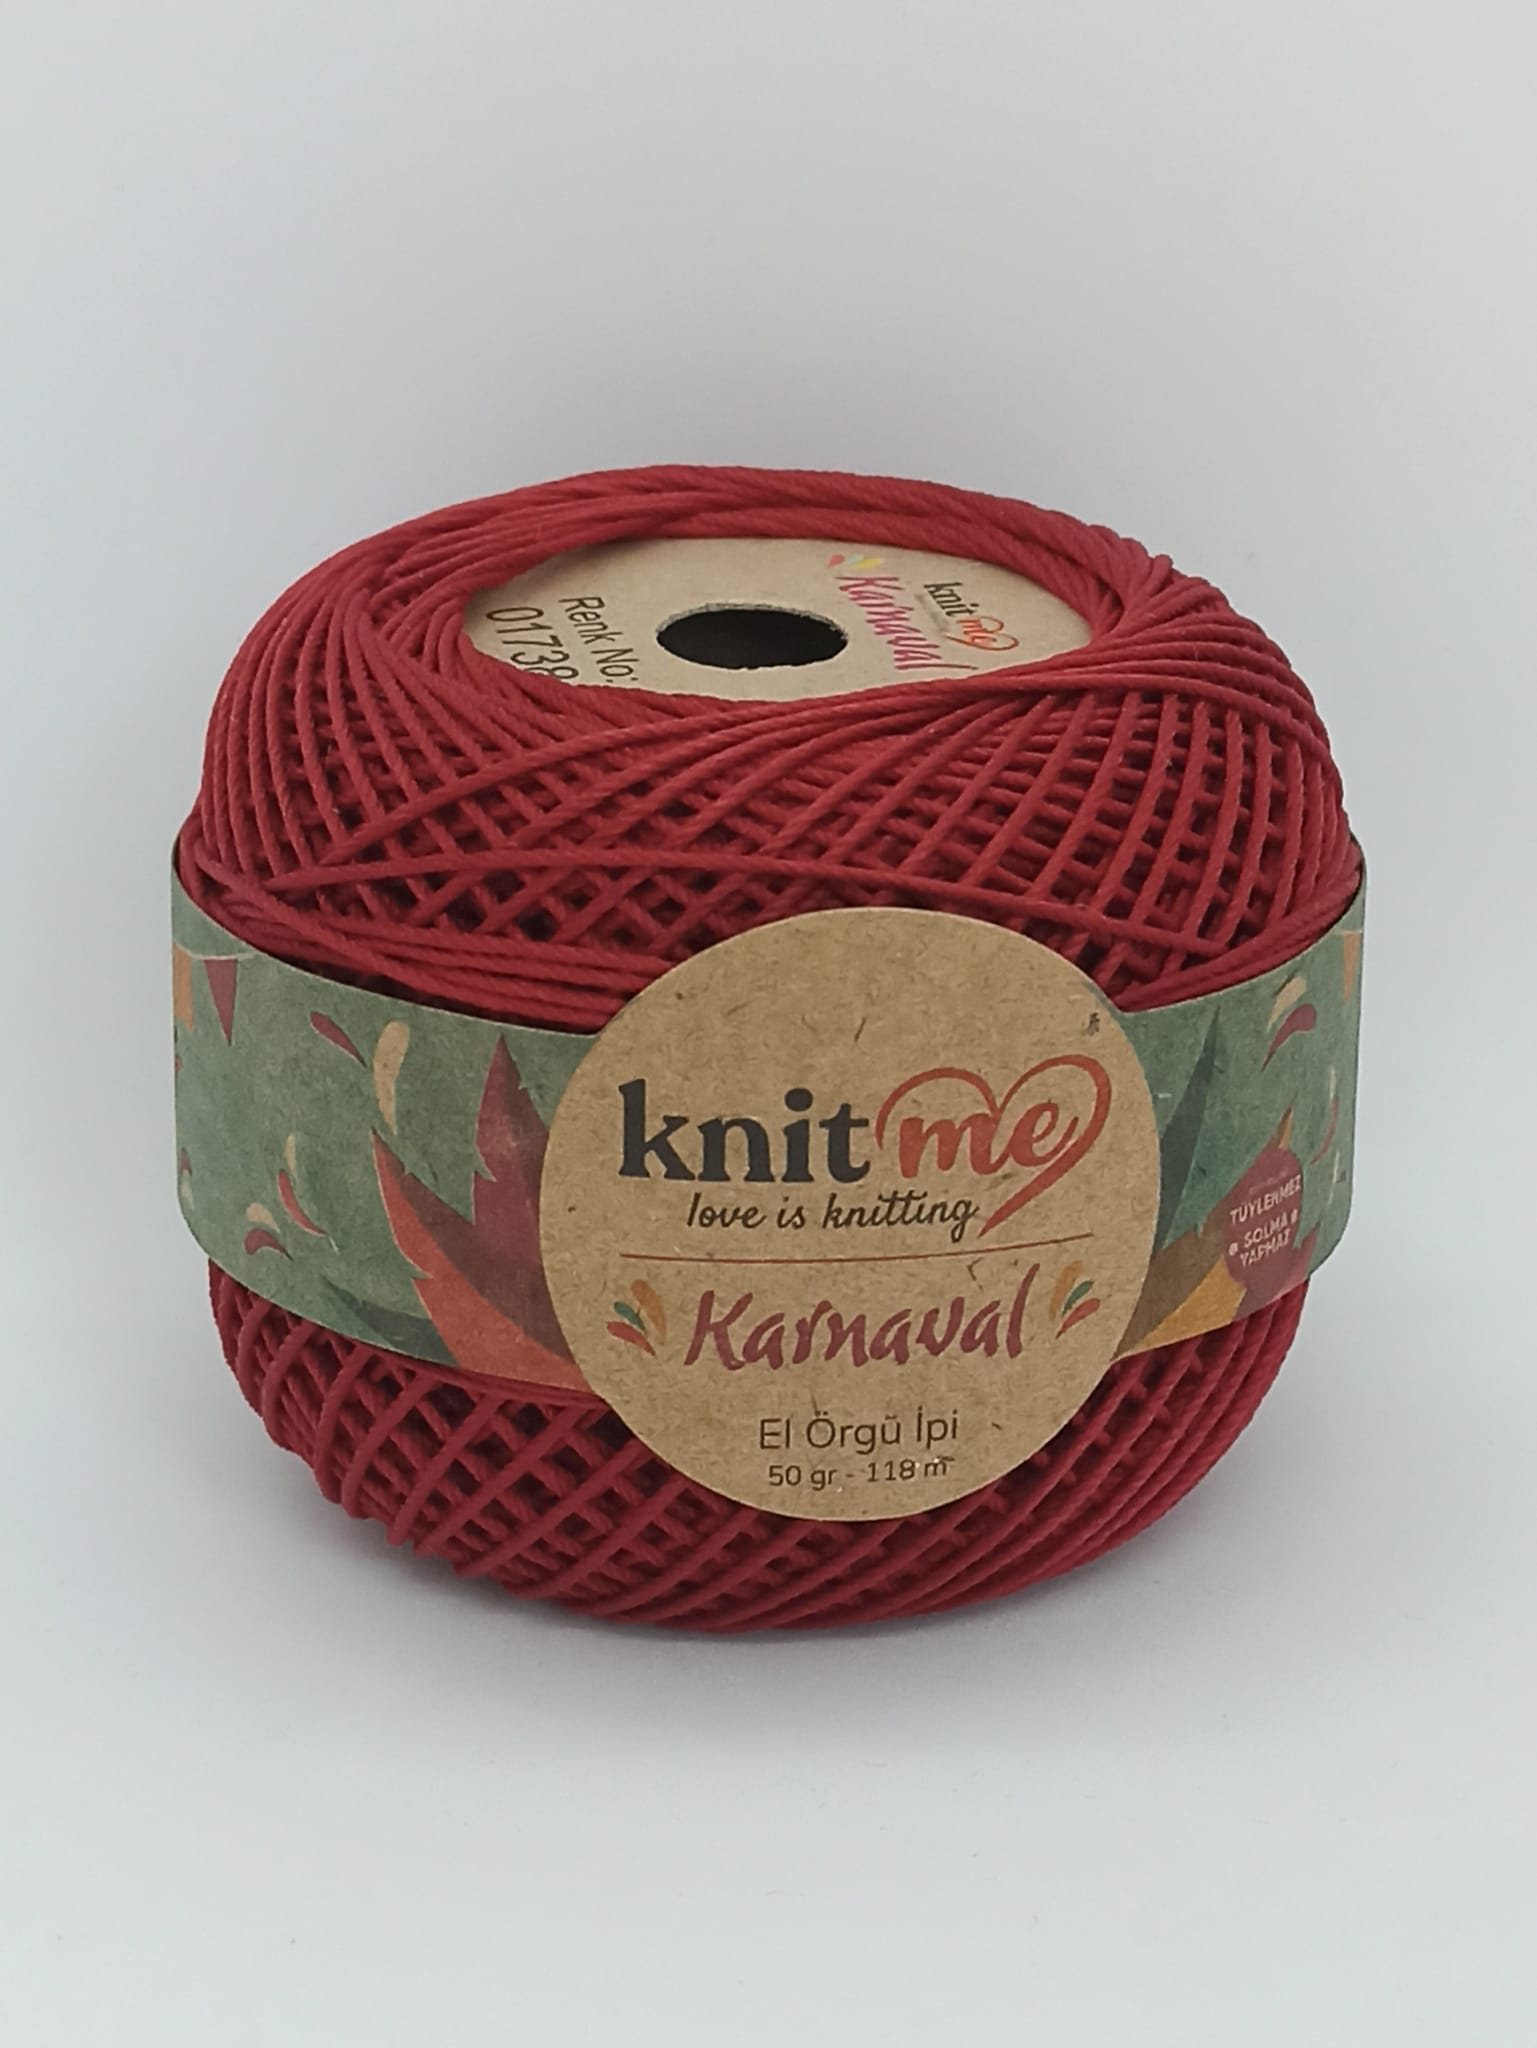 Knit Me Karnaval 01738